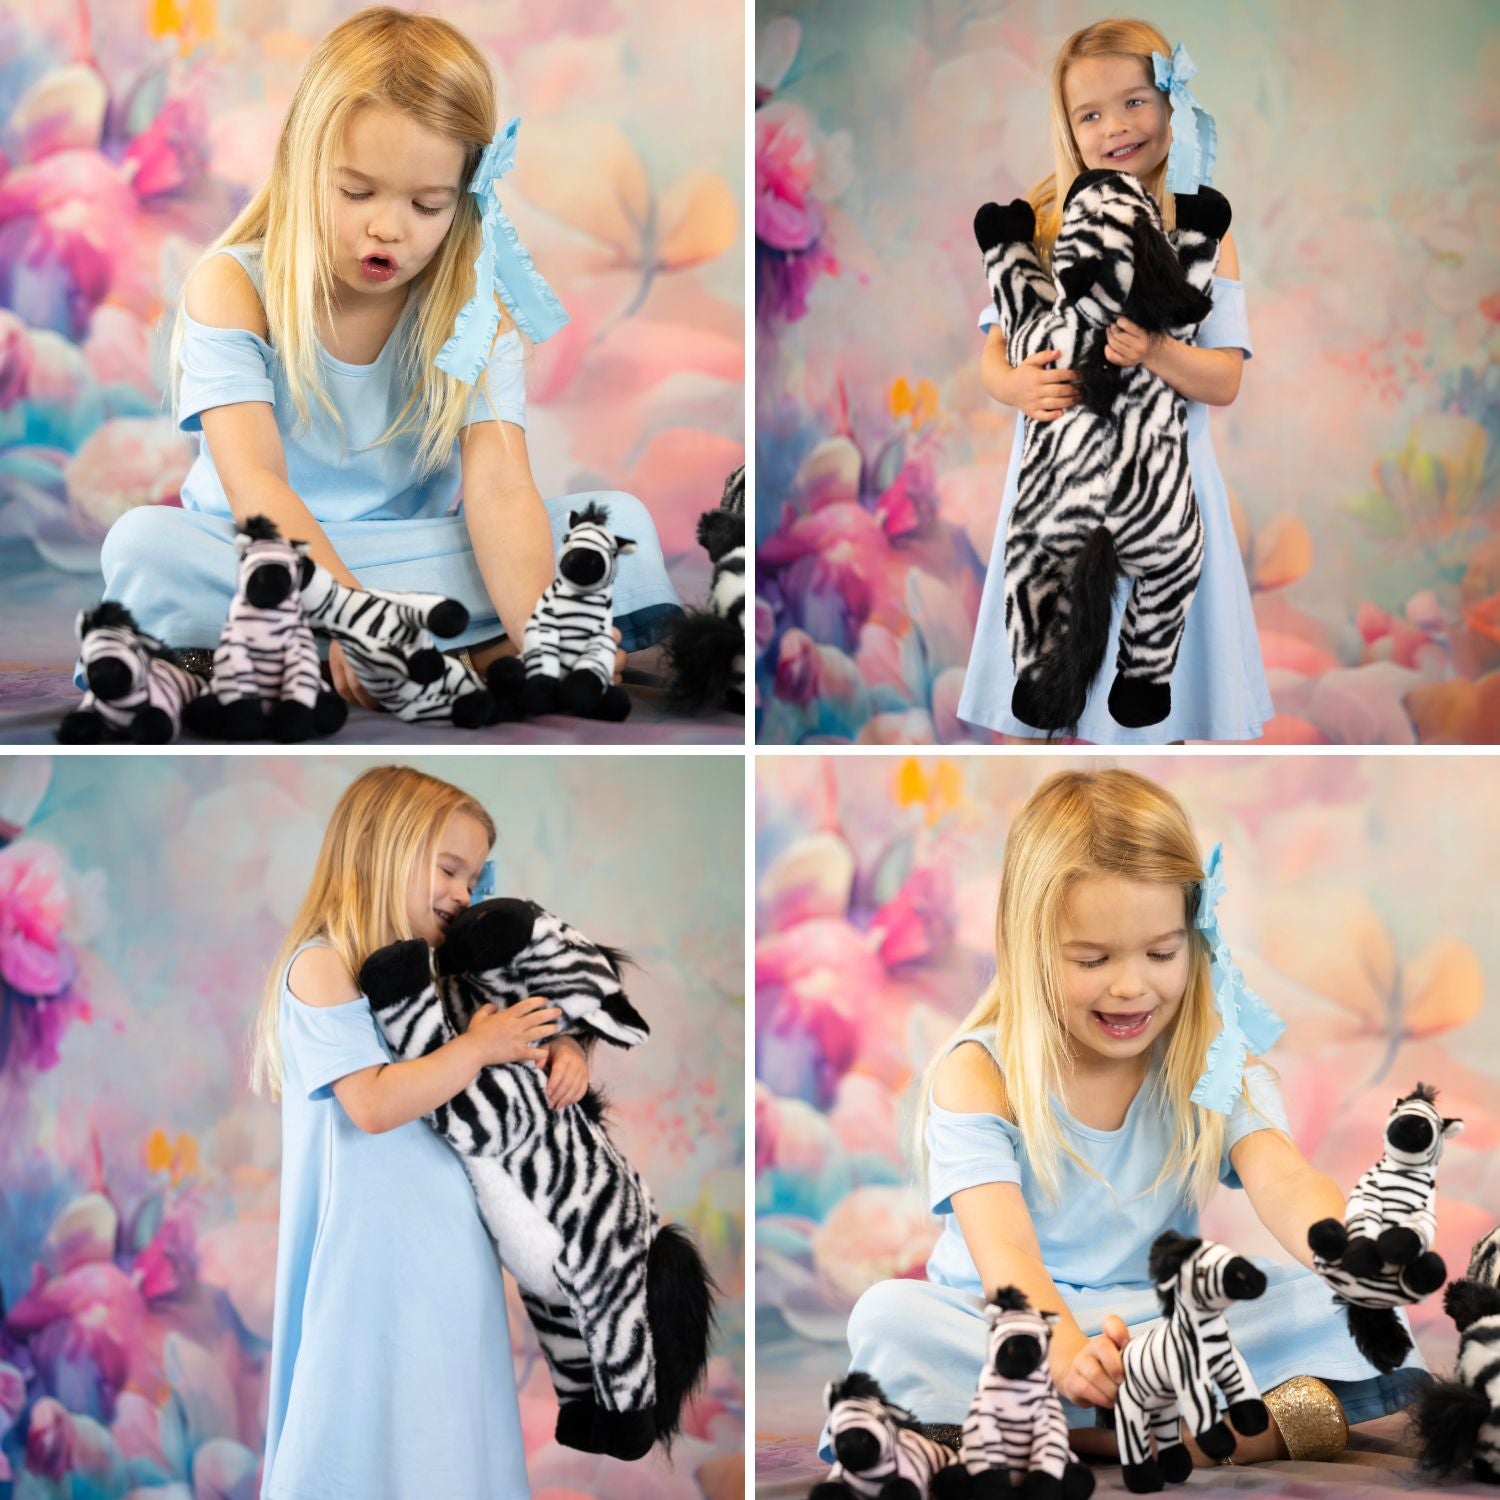 Zebra Stuffed Animal Plush Toys, 25.2 Inches